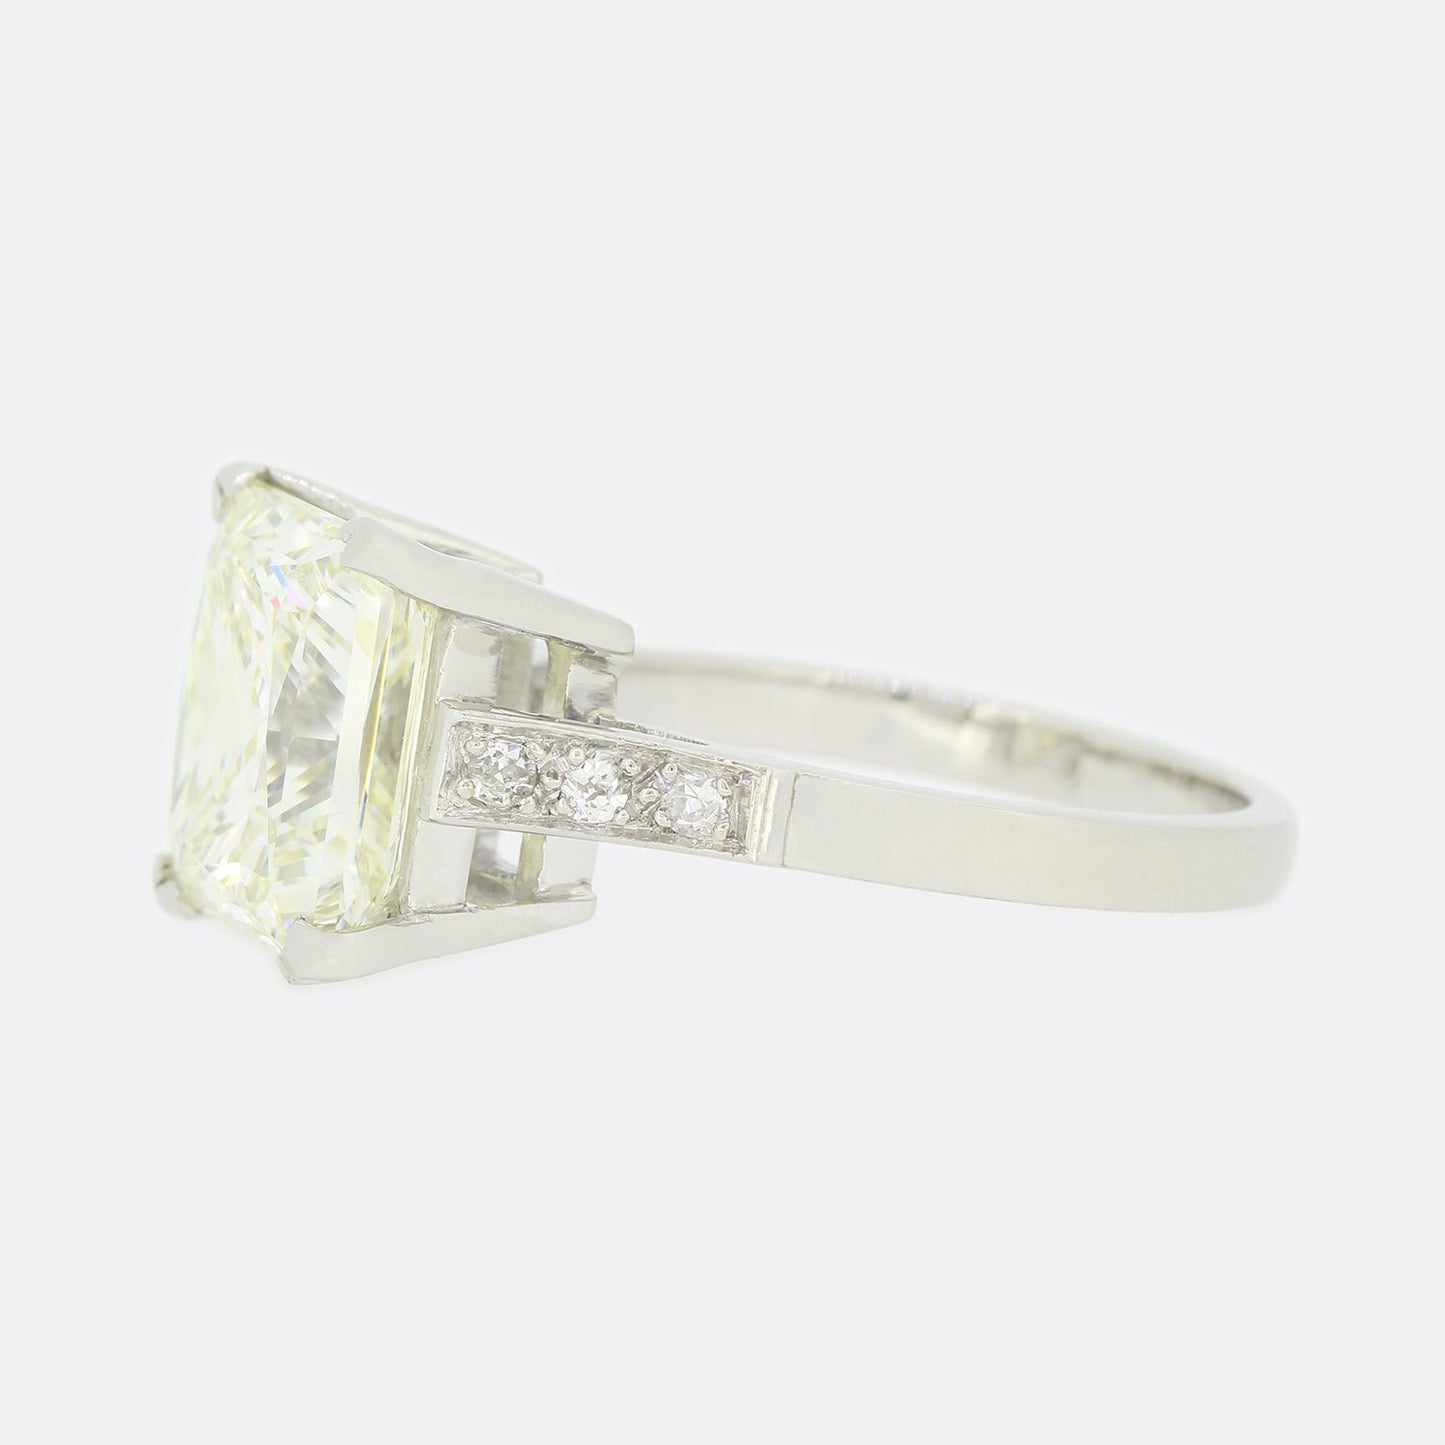 5.02 Carat Princess Cut Diamond Solitaire Engagement Ring